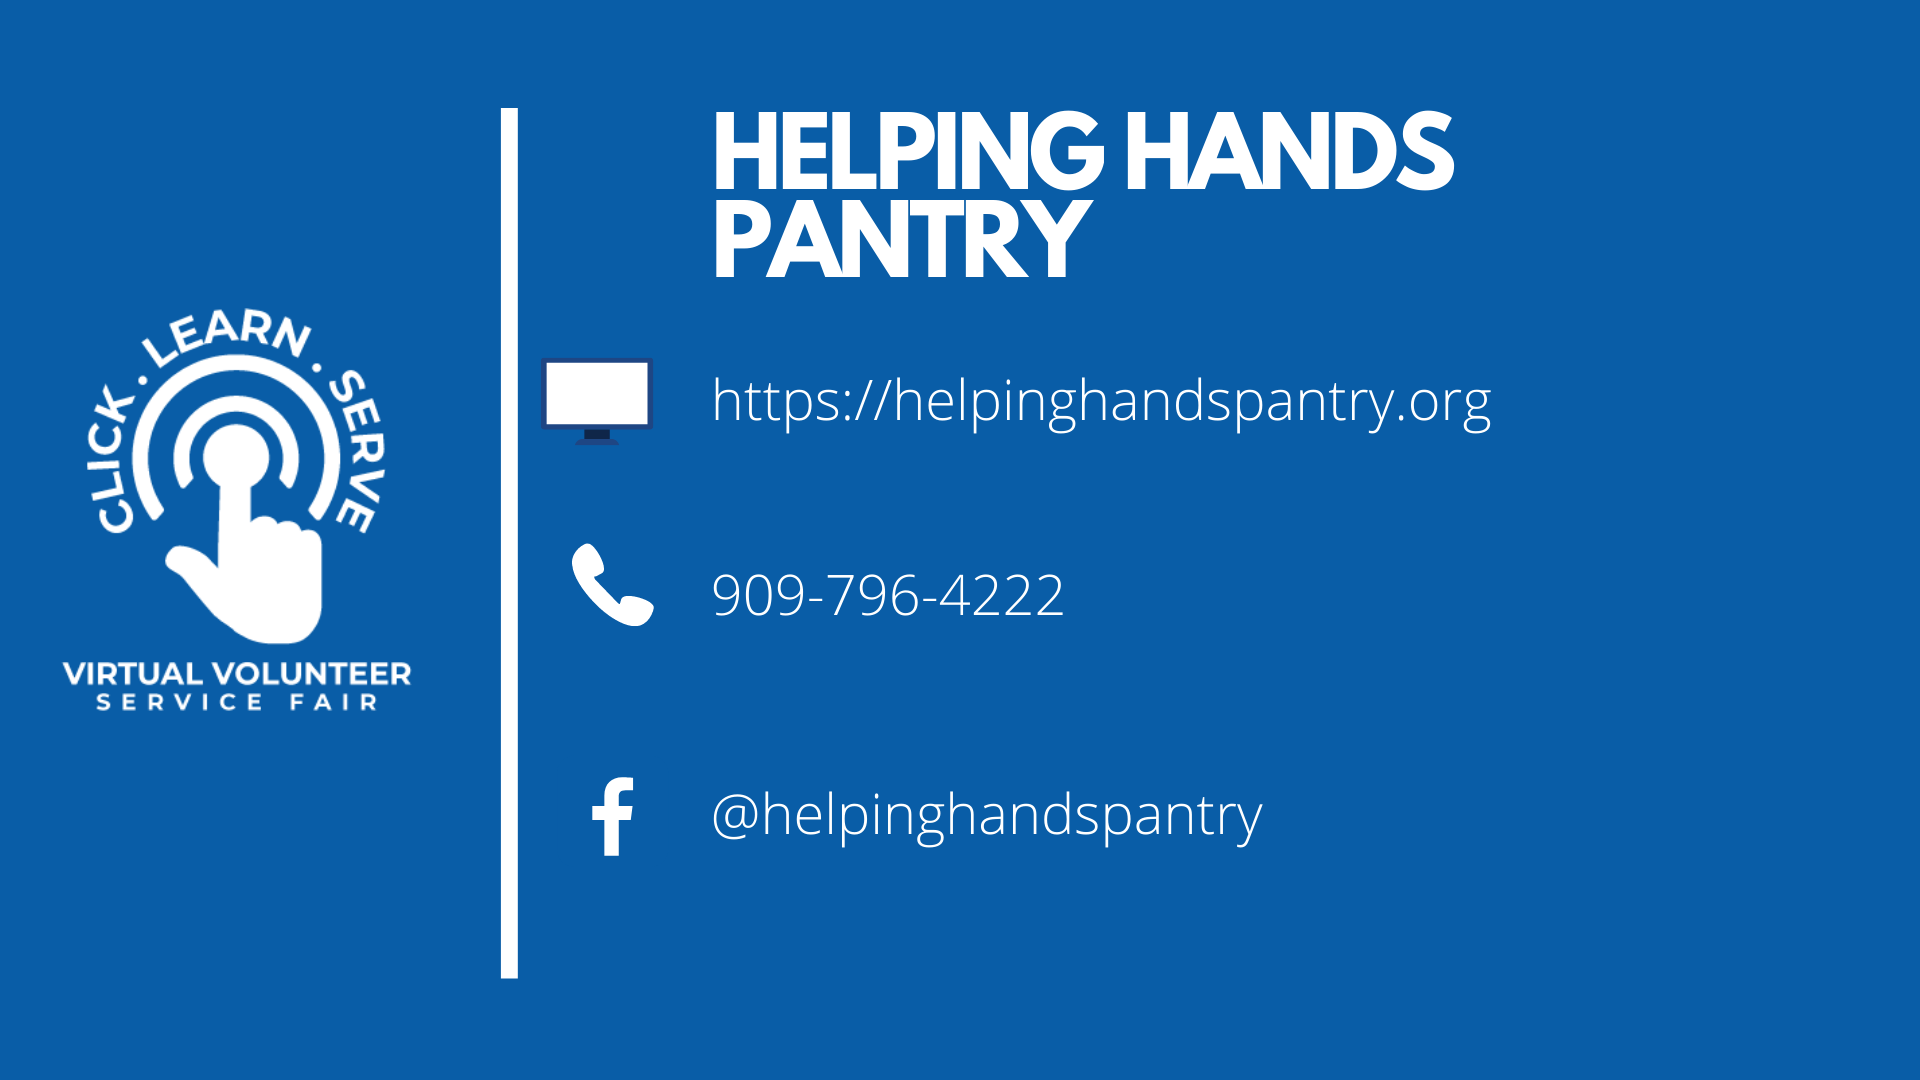 Helping Hands Pantry nonprofit video for Virtual Volunteer Fair.